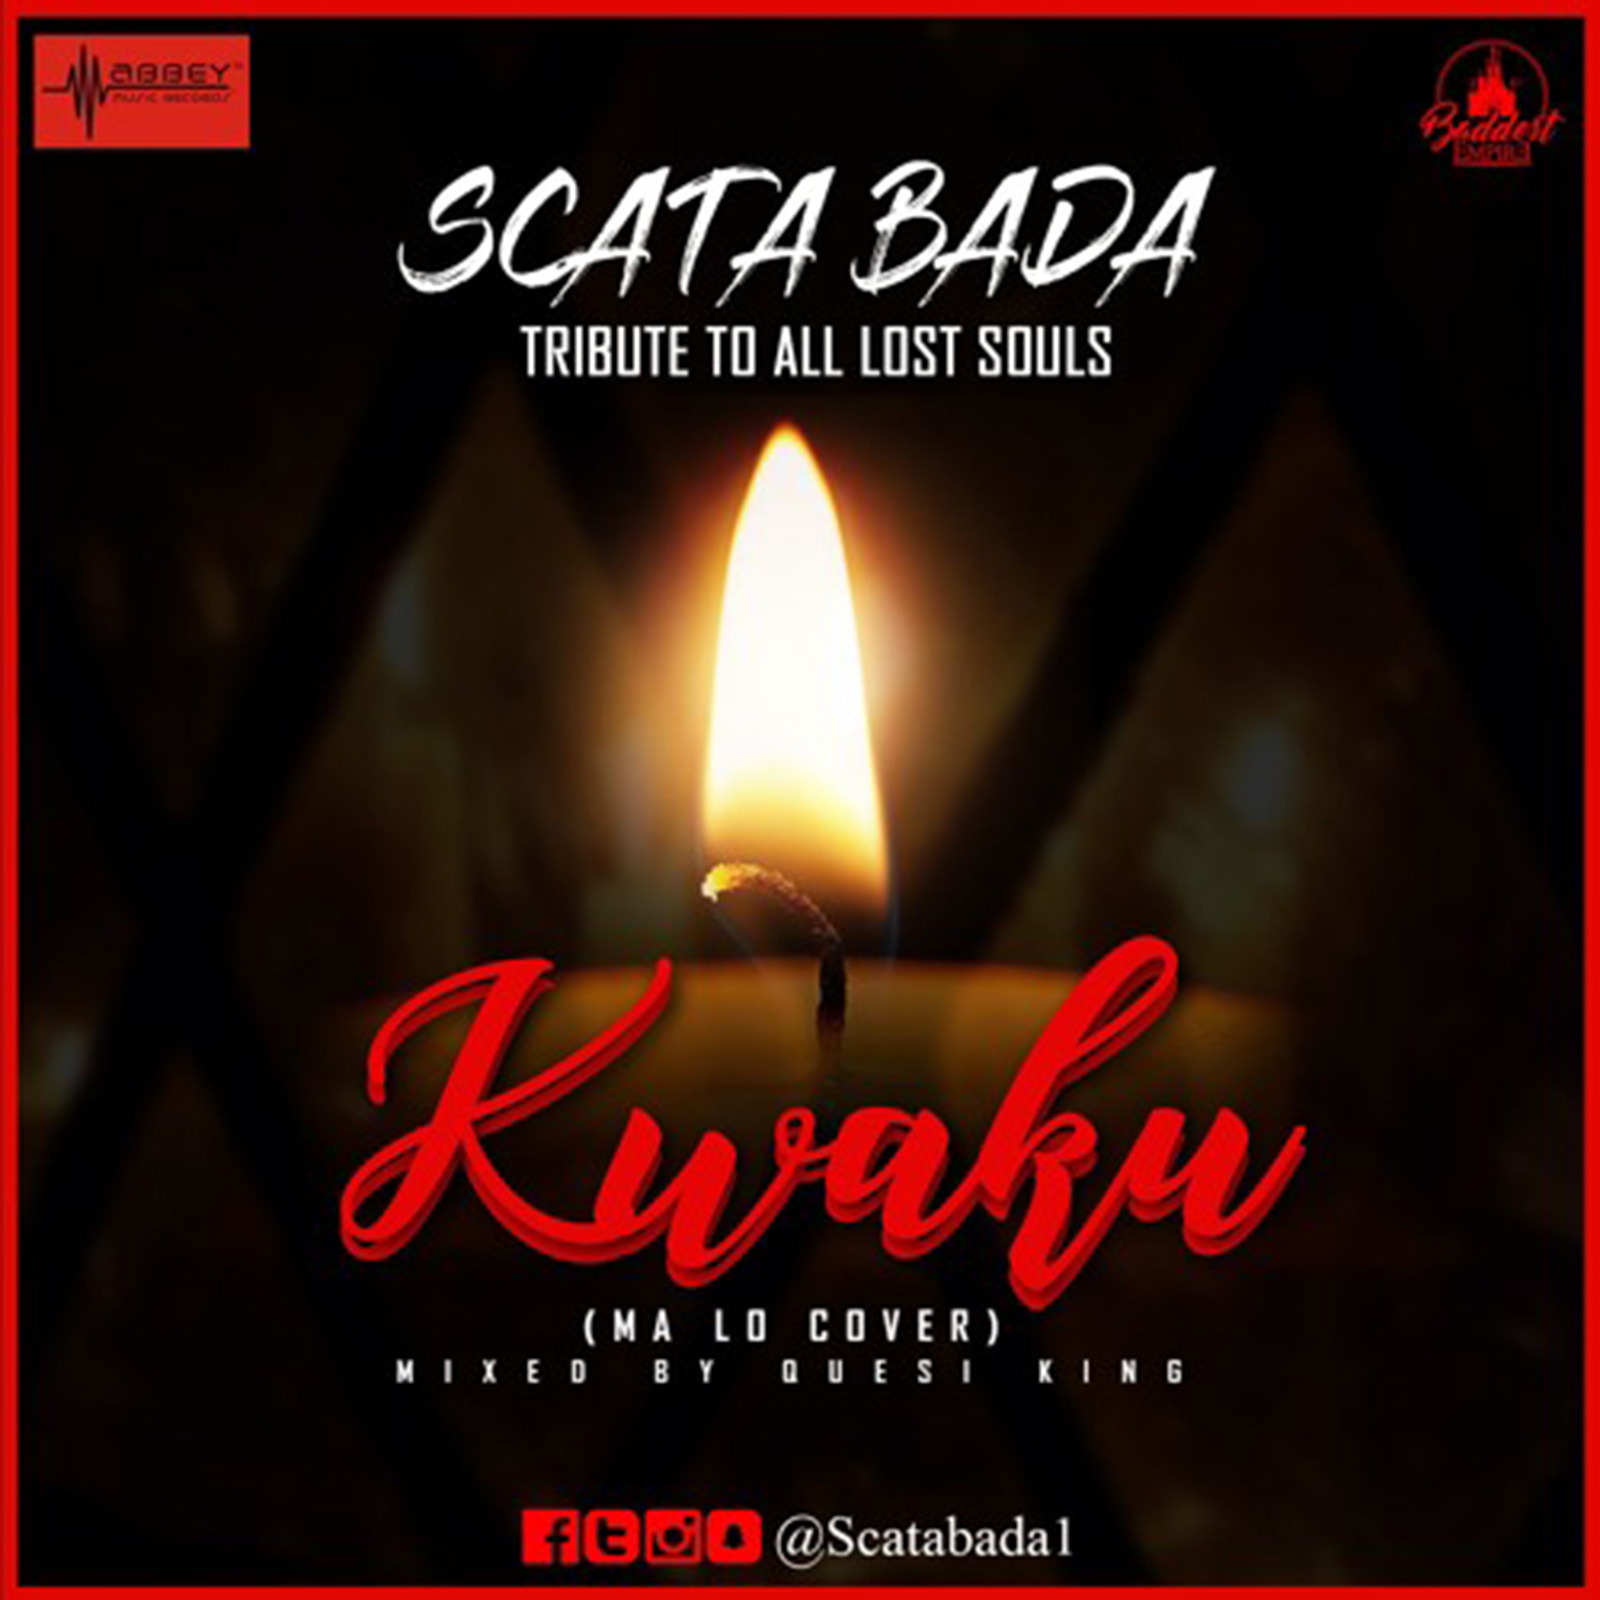 Kwaku (Tribute to all lost souls) by Scata Bada